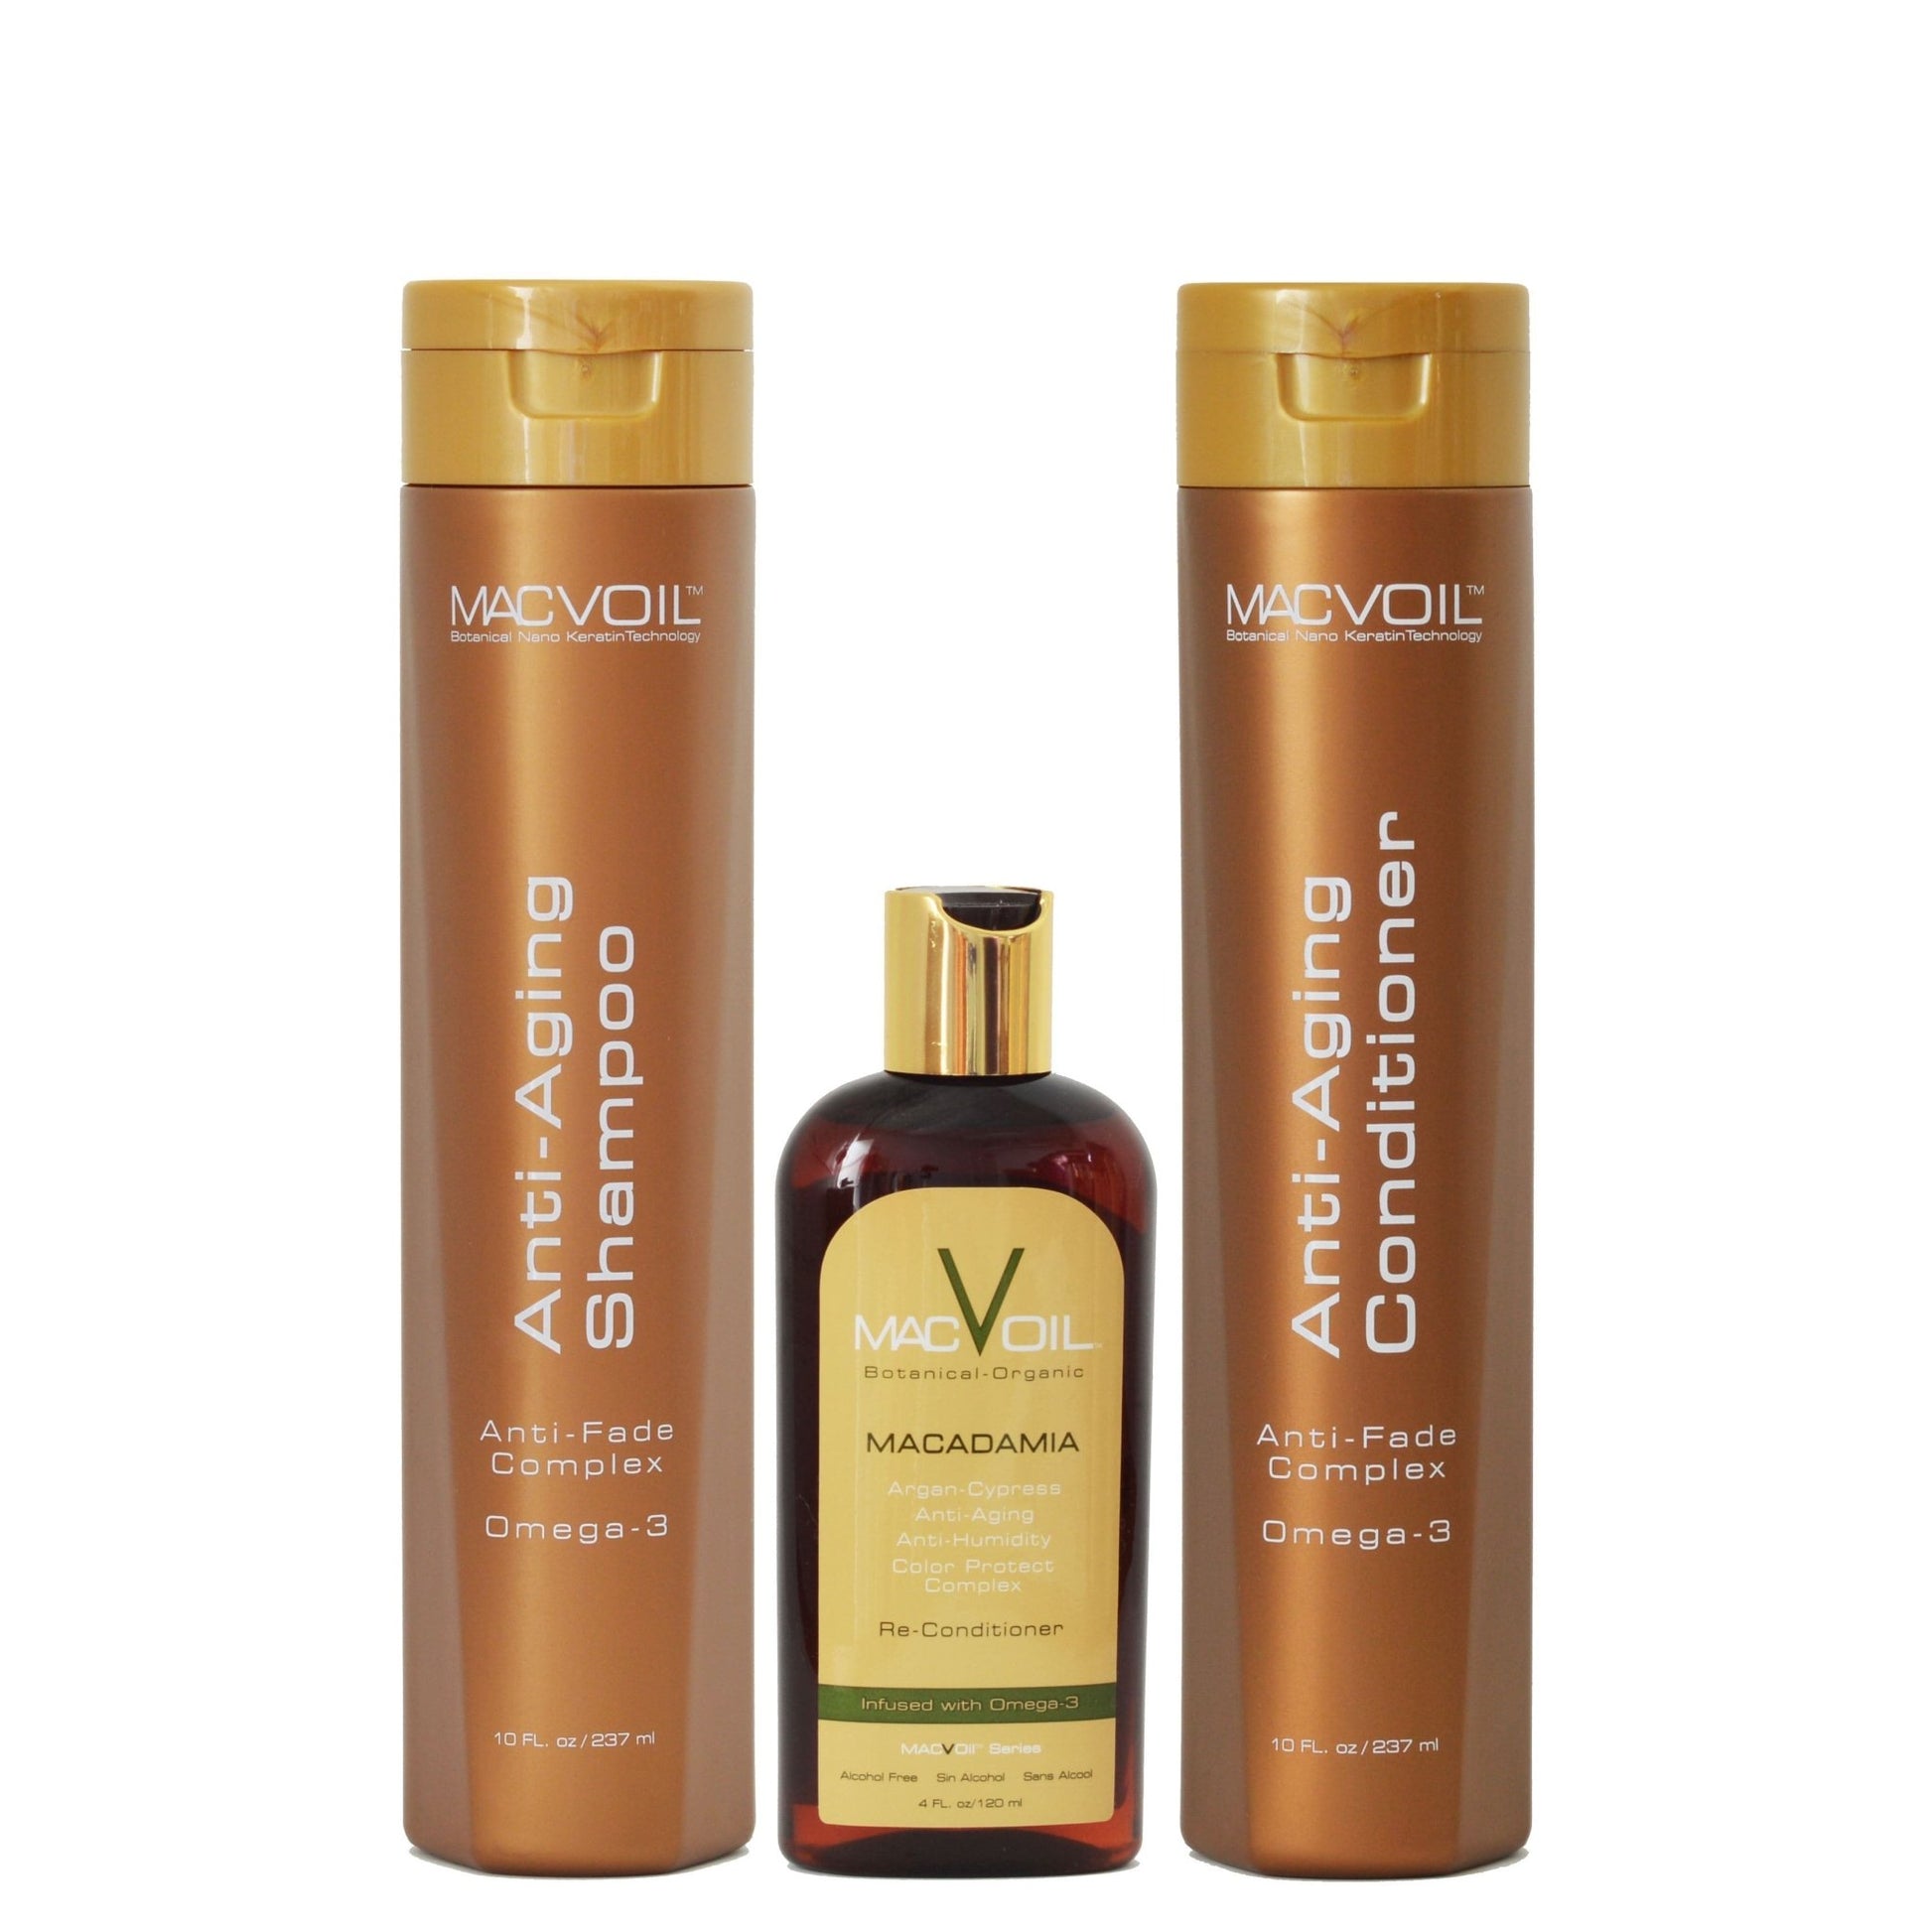 Macvoil Gift Set with Macadamia Oil | MACVOIL - SH Salons